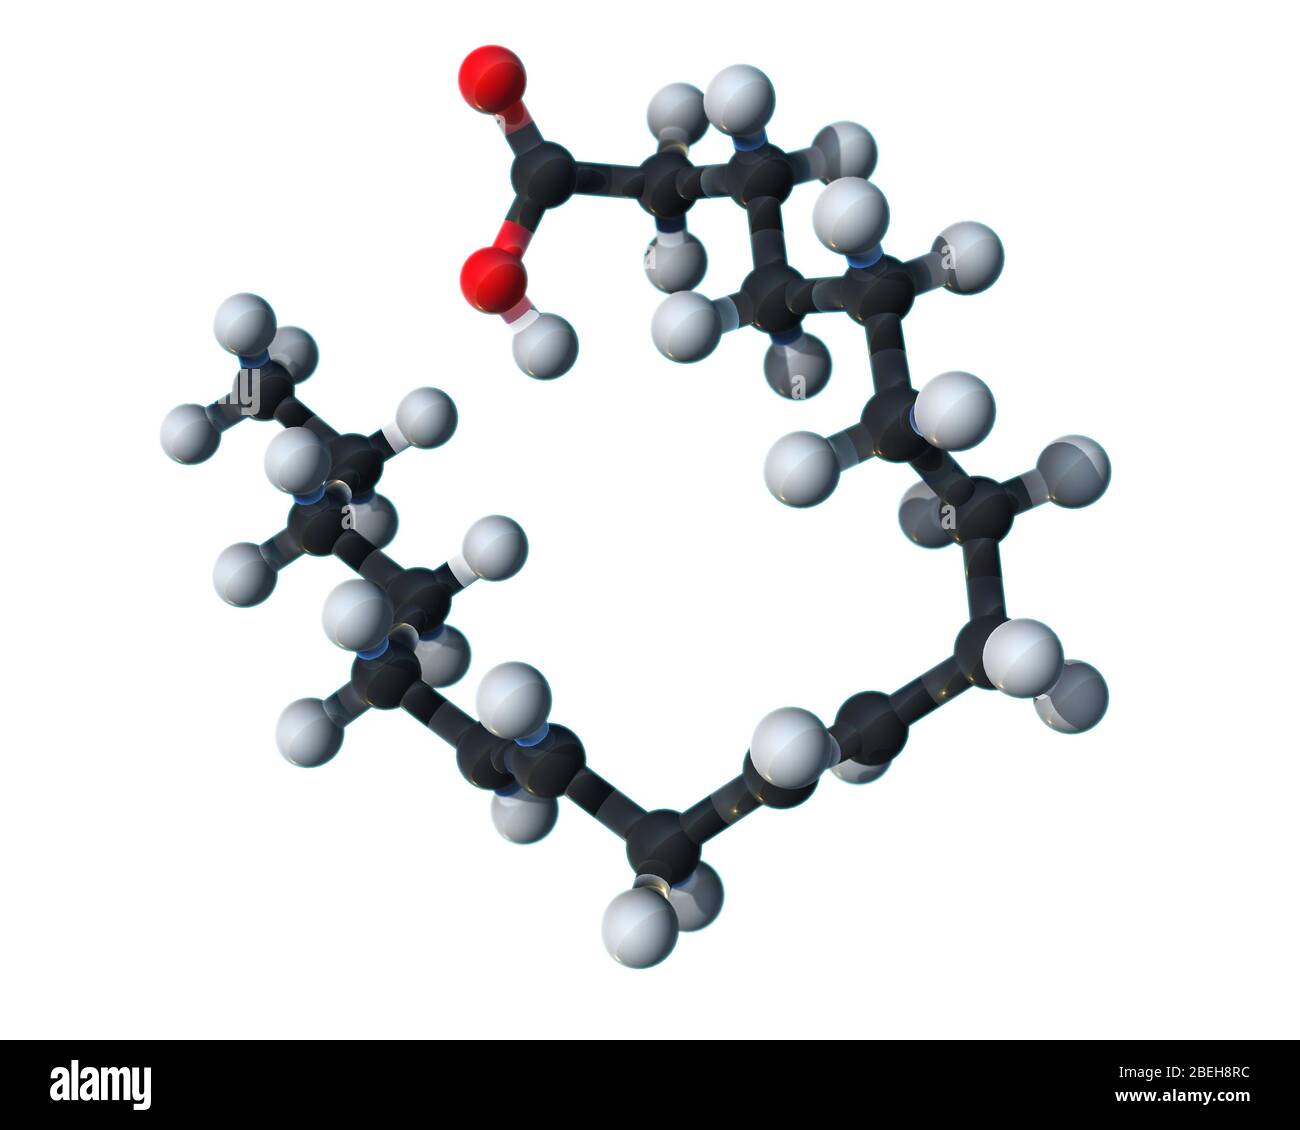 Linoleic Acid, Molecular Model Stock Photo